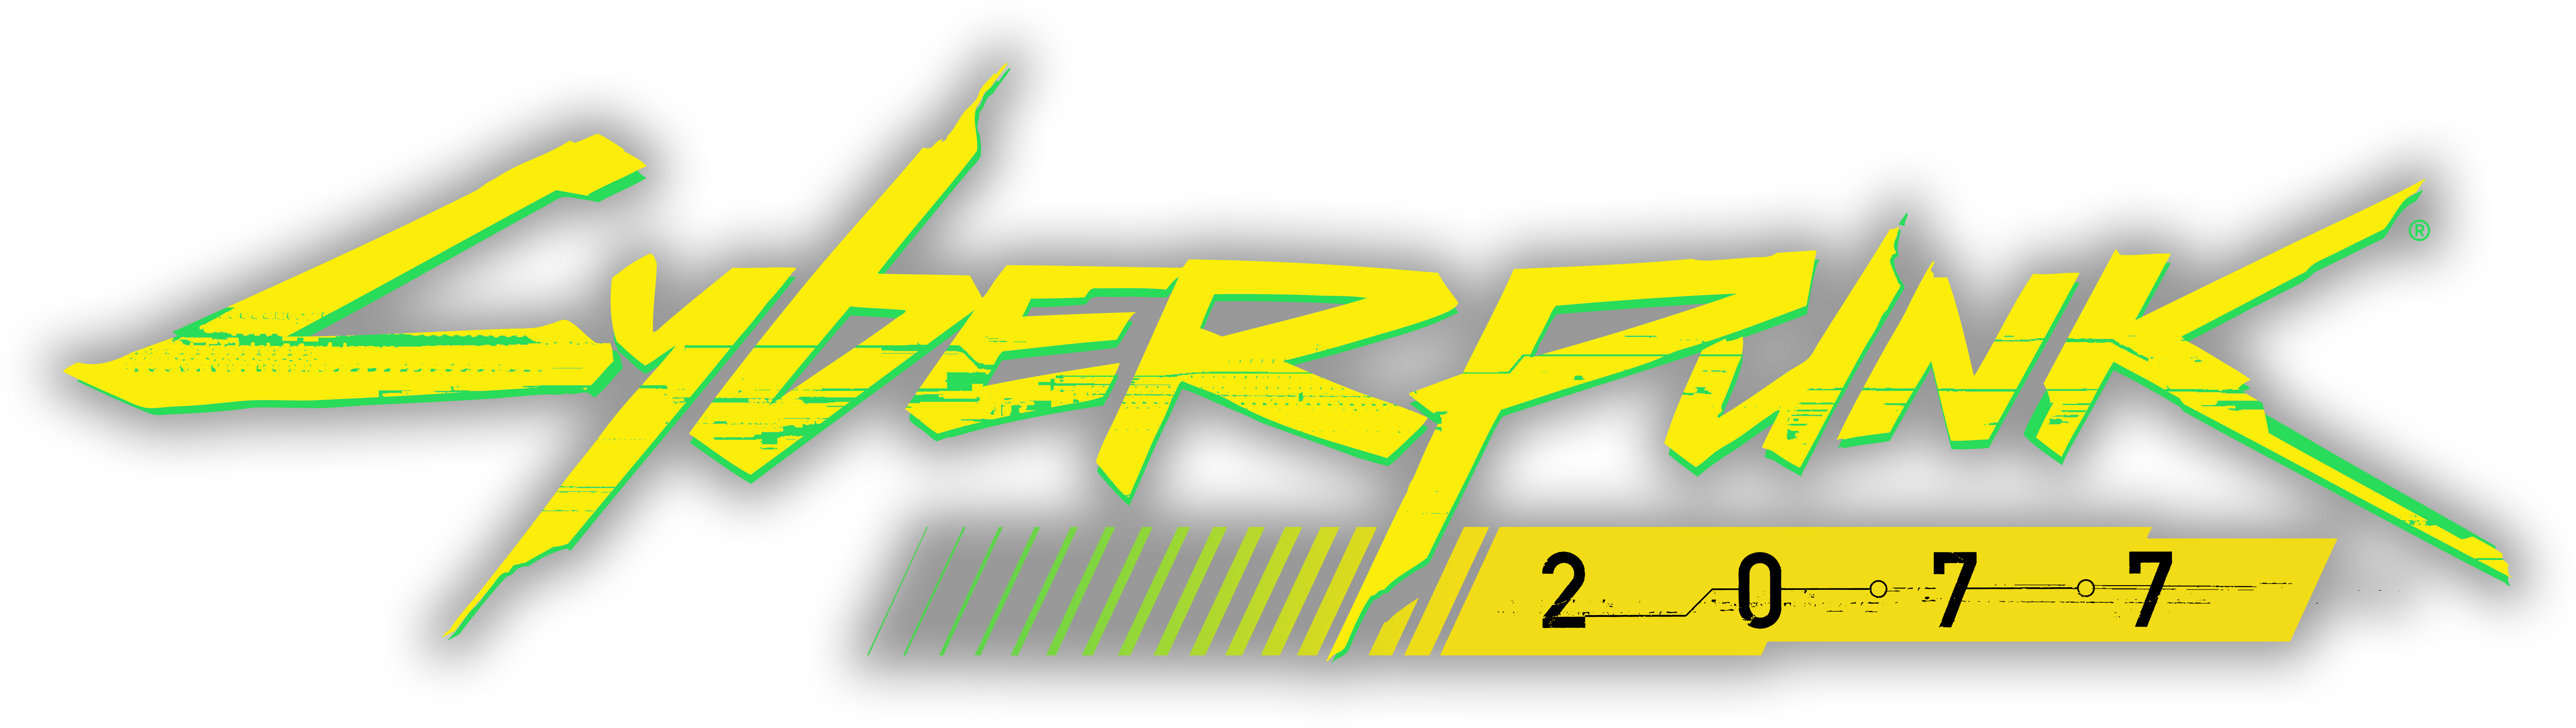 Cyberpunk logo maker фото 22